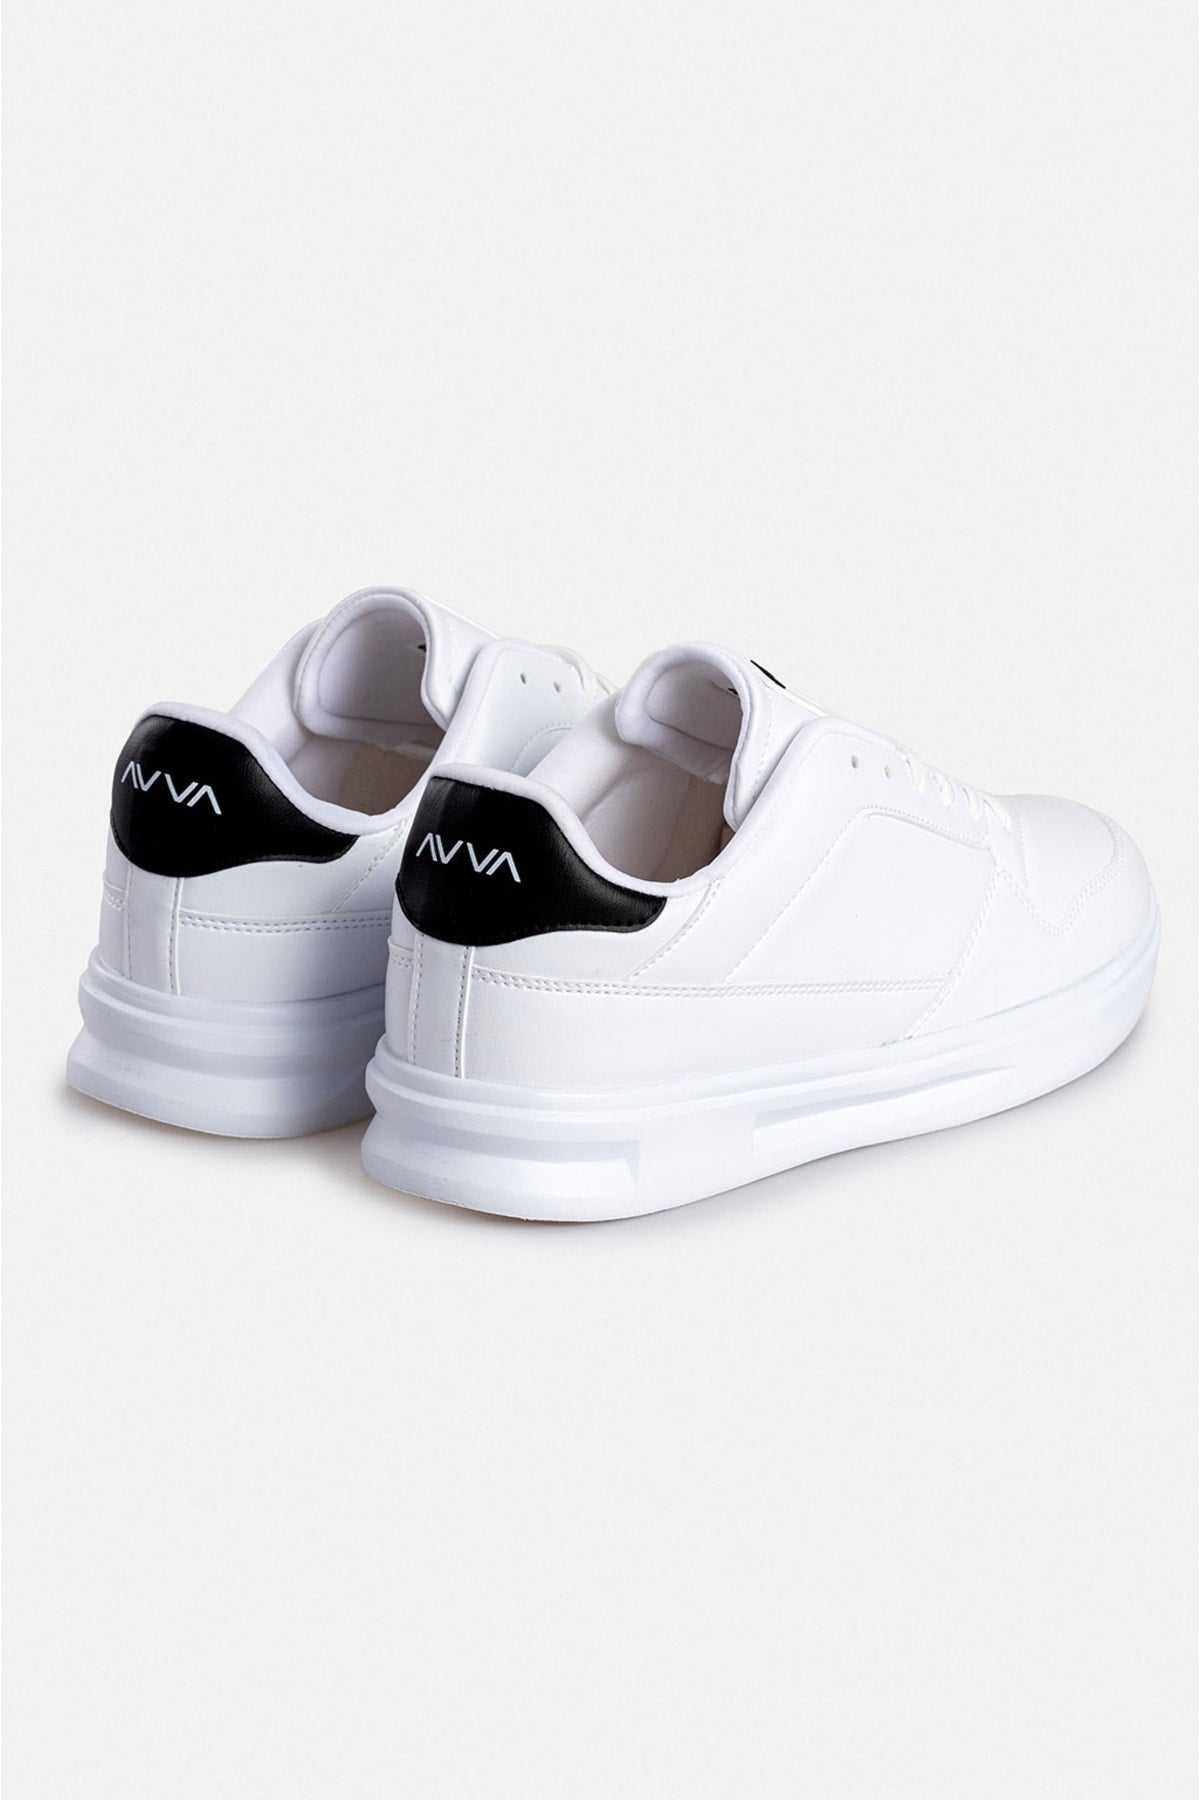 Men's White Sneakers A31y8068